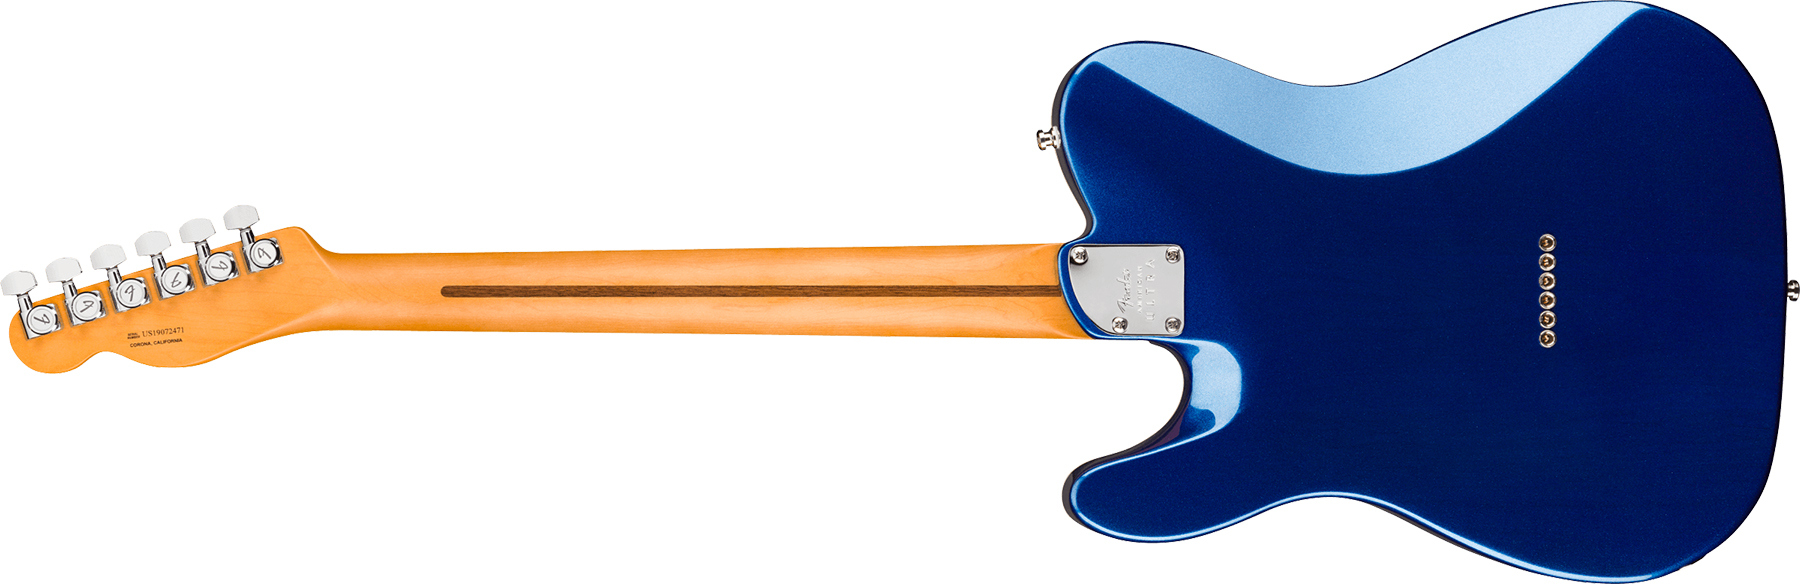 Fender Tele American Ultra 2019 Usa Mn - Cobra Blue - Tel shape electric guitar - Variation 1